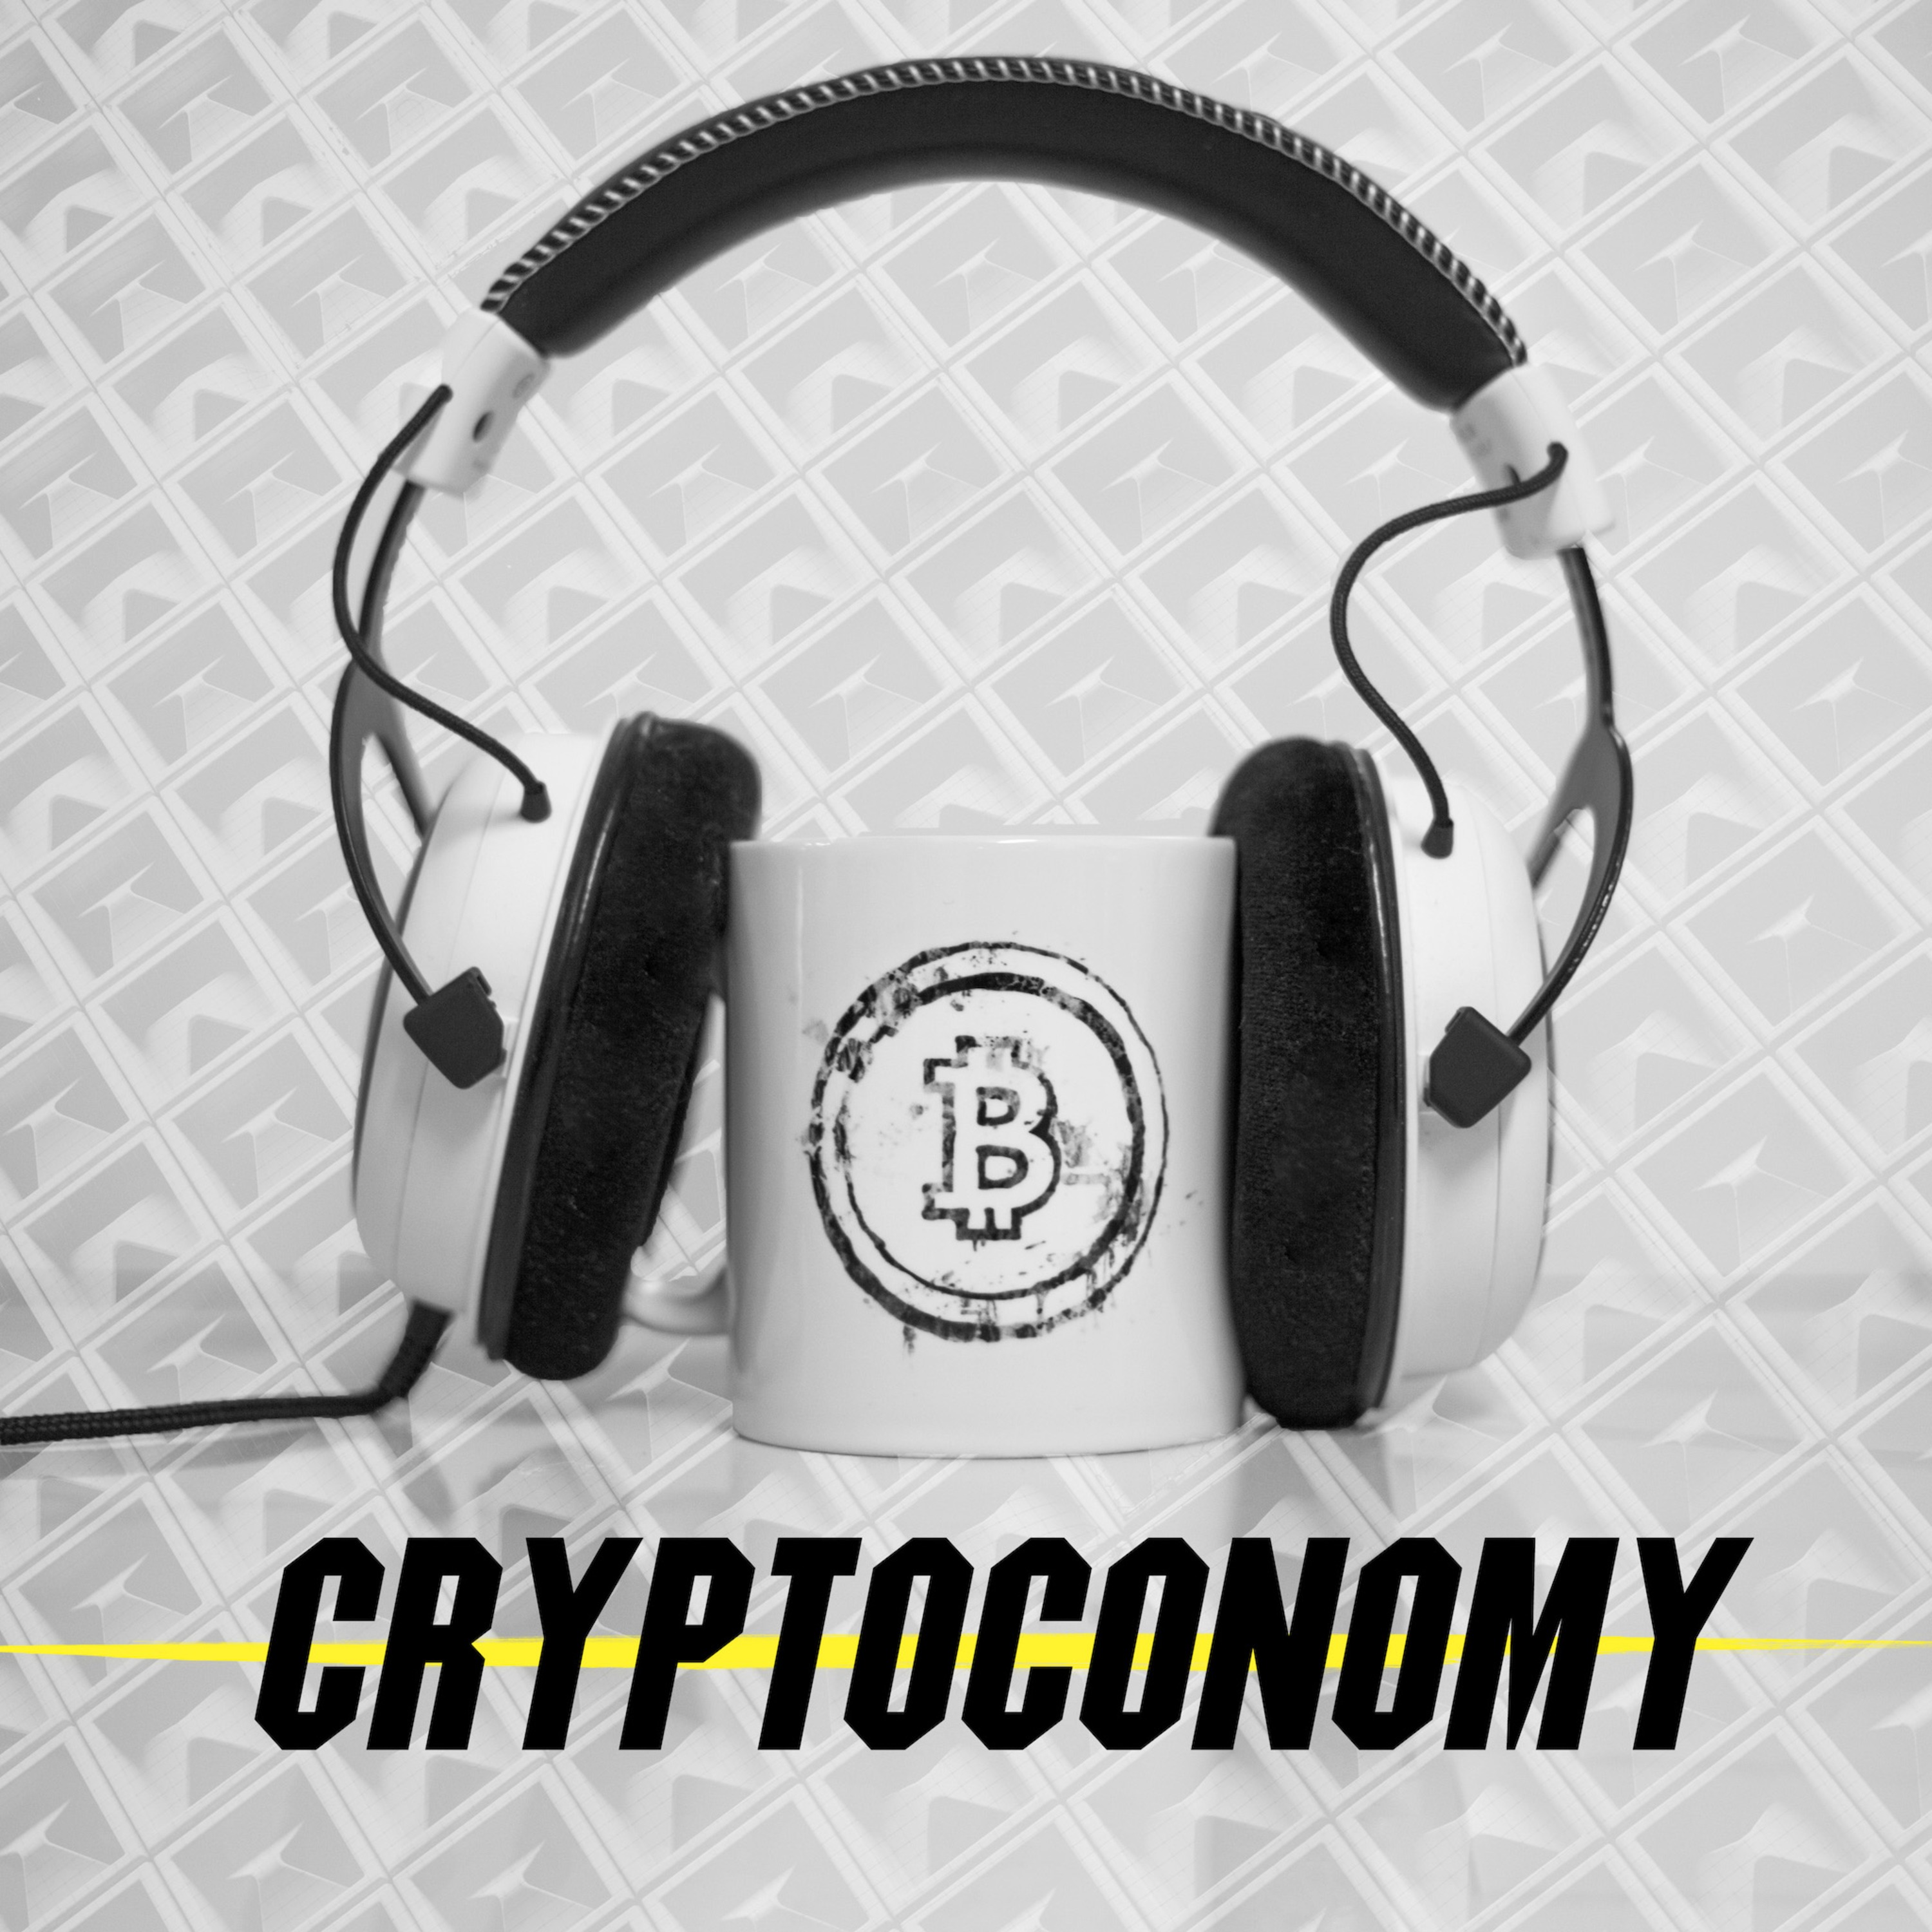 CryptoQuikRead_194 - The Cryptocurrency Phenomenon [Part 9]